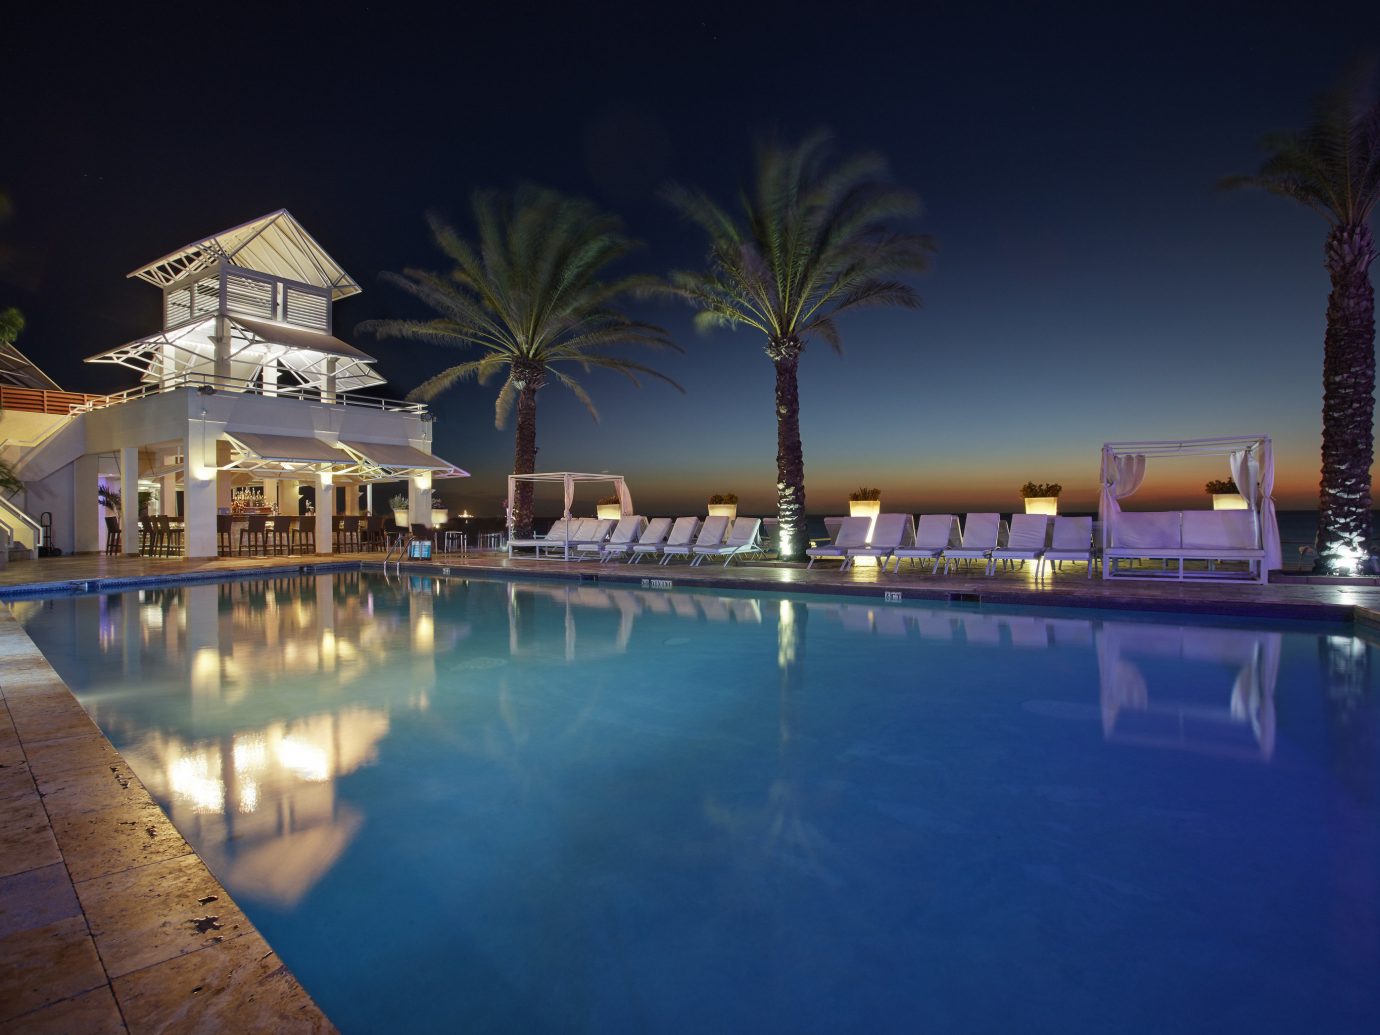 Hotels swimming pool property Resort night estate reflecting pool resort town mansion condominium shore